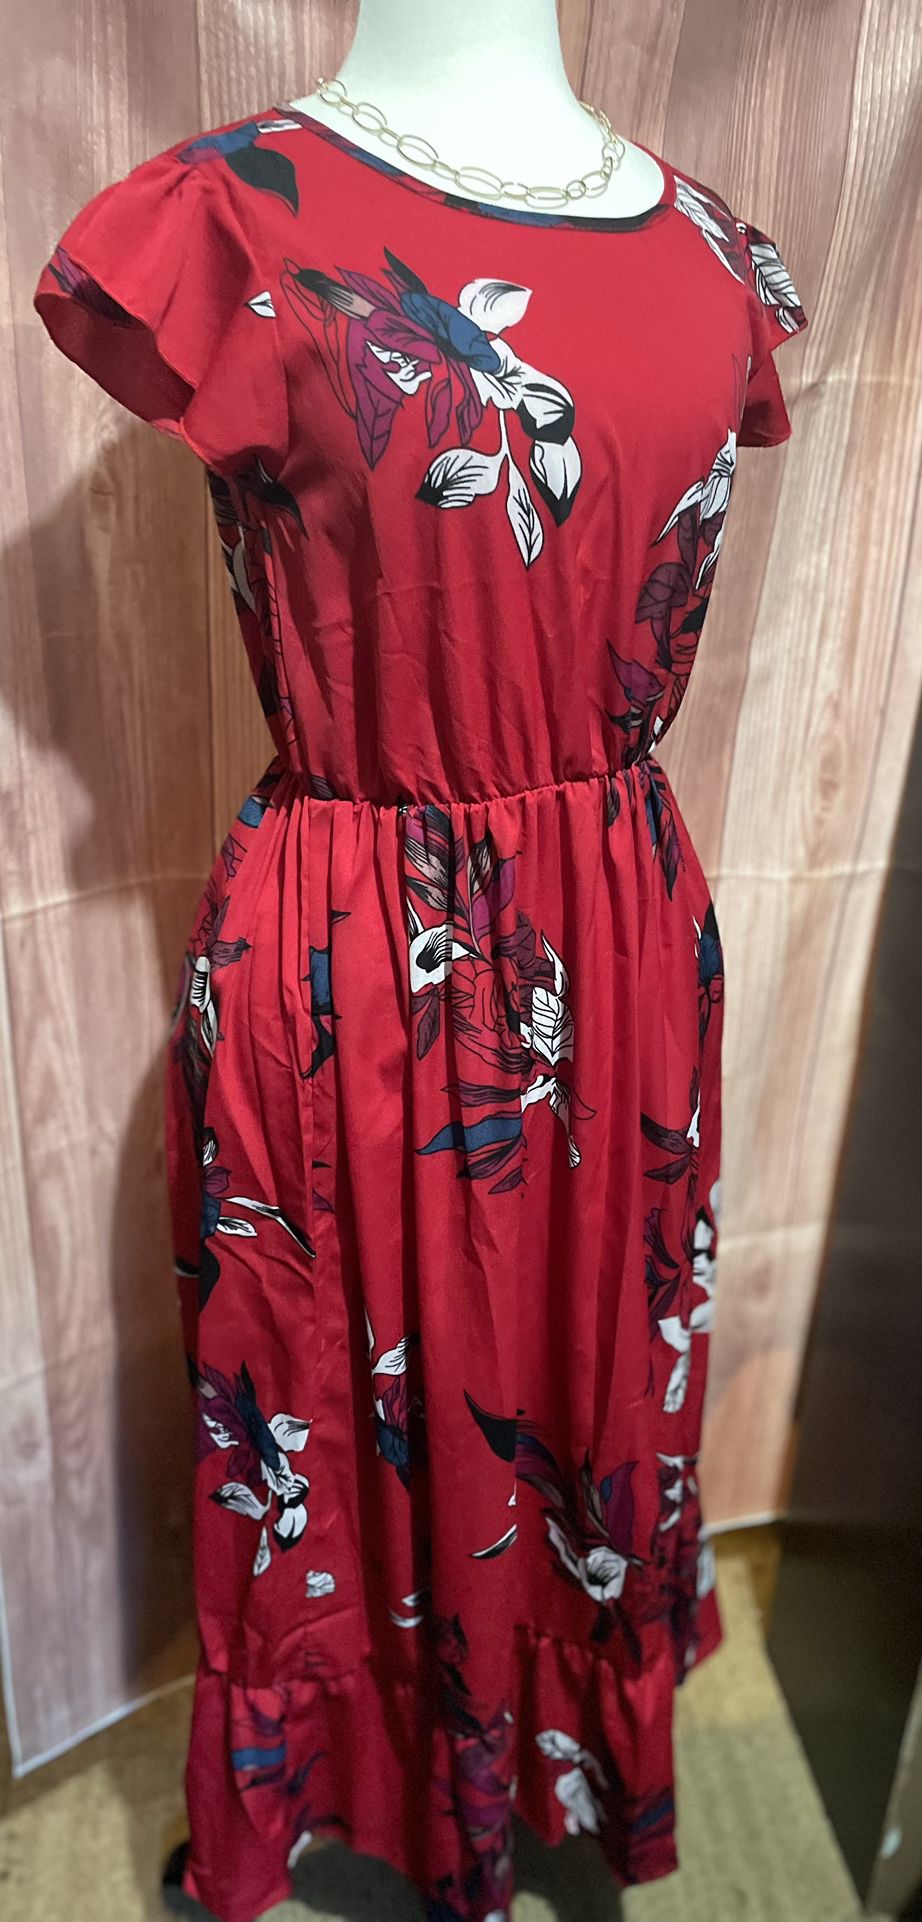 Pat Pat Women Red Short Sleeve Dress 👗 Size Small 